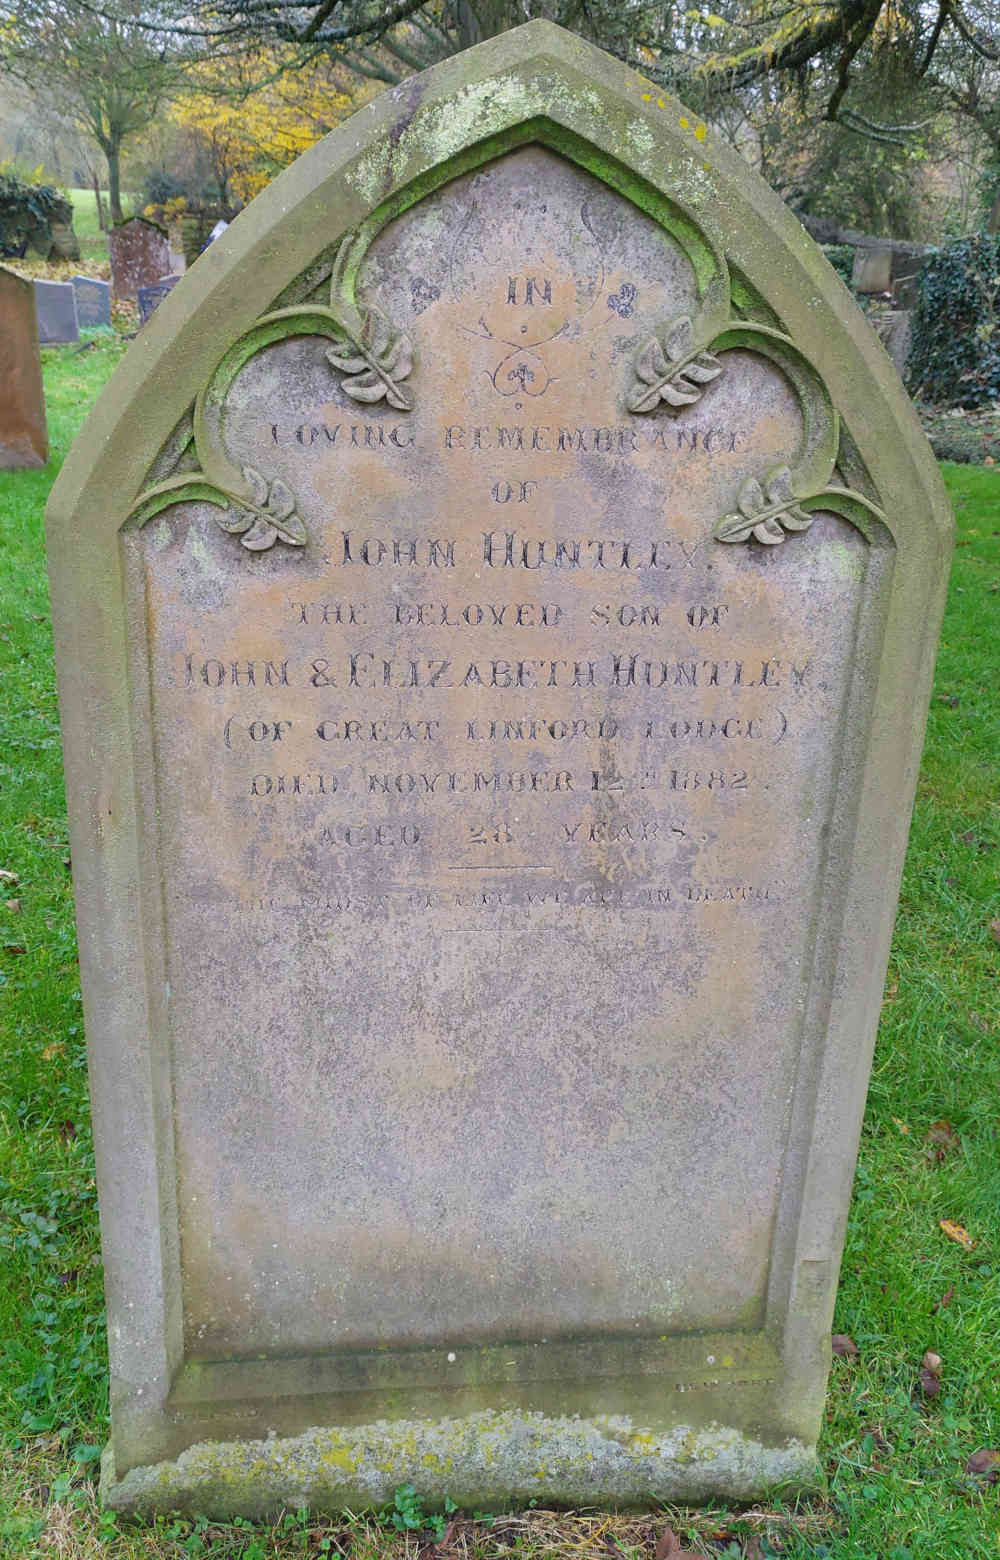 Gravestone St Andrews Churchyard Great Linford John Huntley